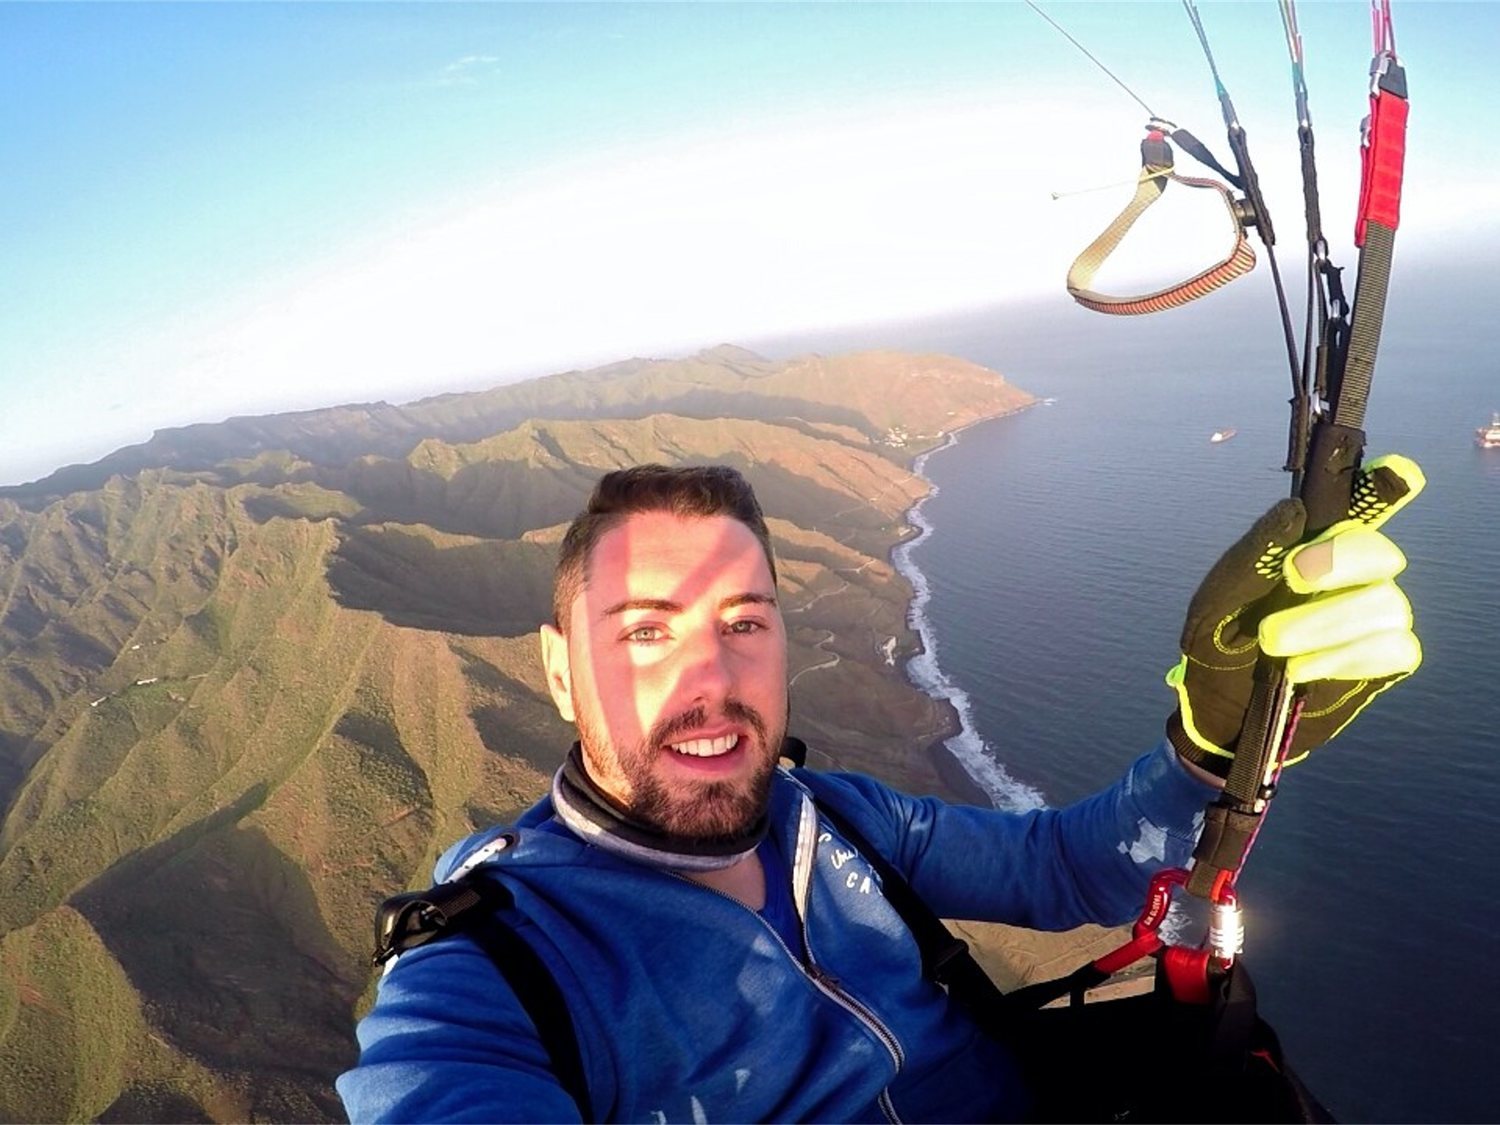 Muere un youtuber que se lanzó en paracaídas para grabar el salto en Alicante